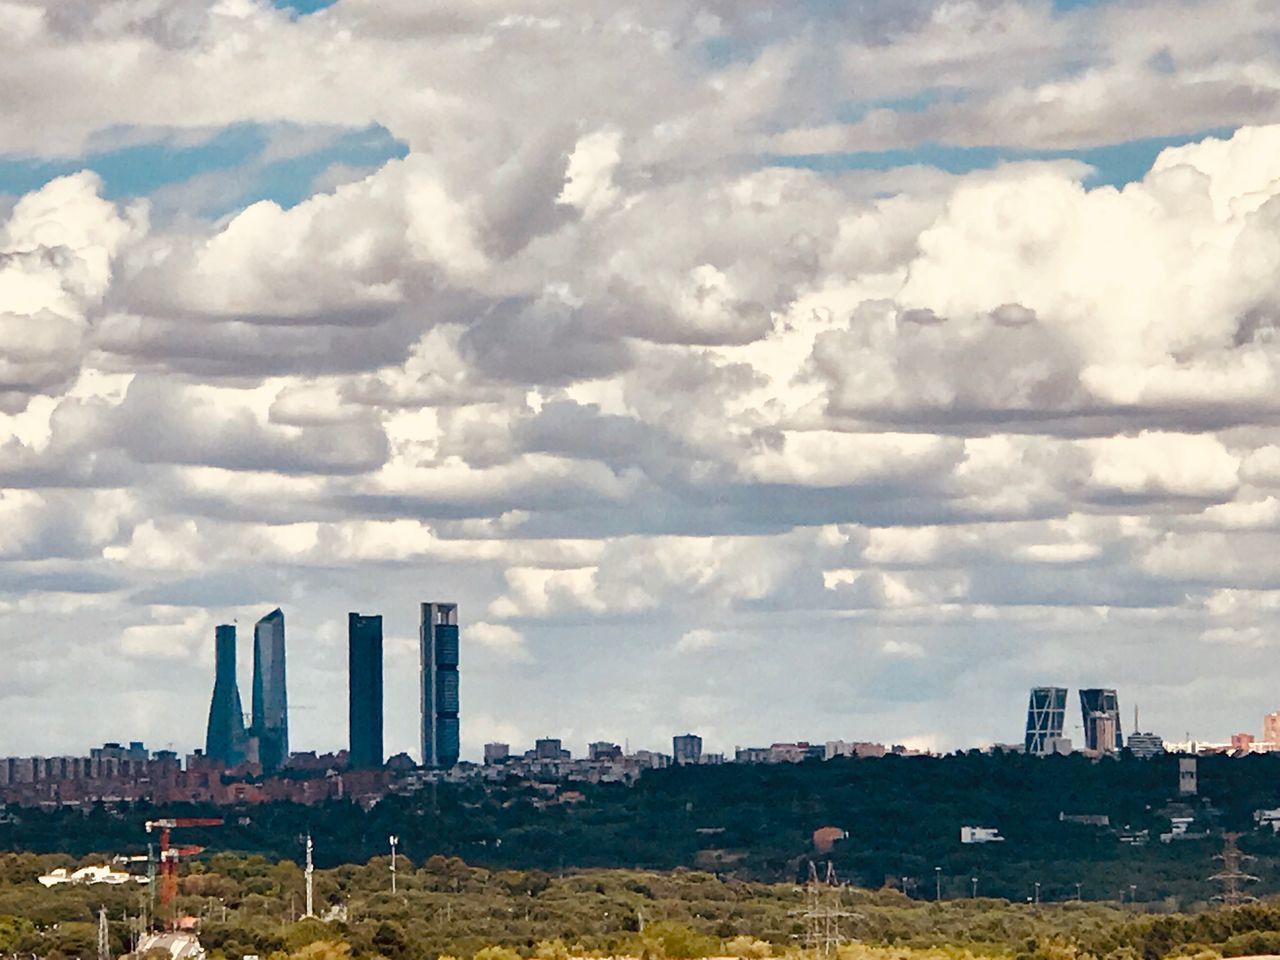 PANORAMIC VIEW OF BUILDINGS AGAINST SKY